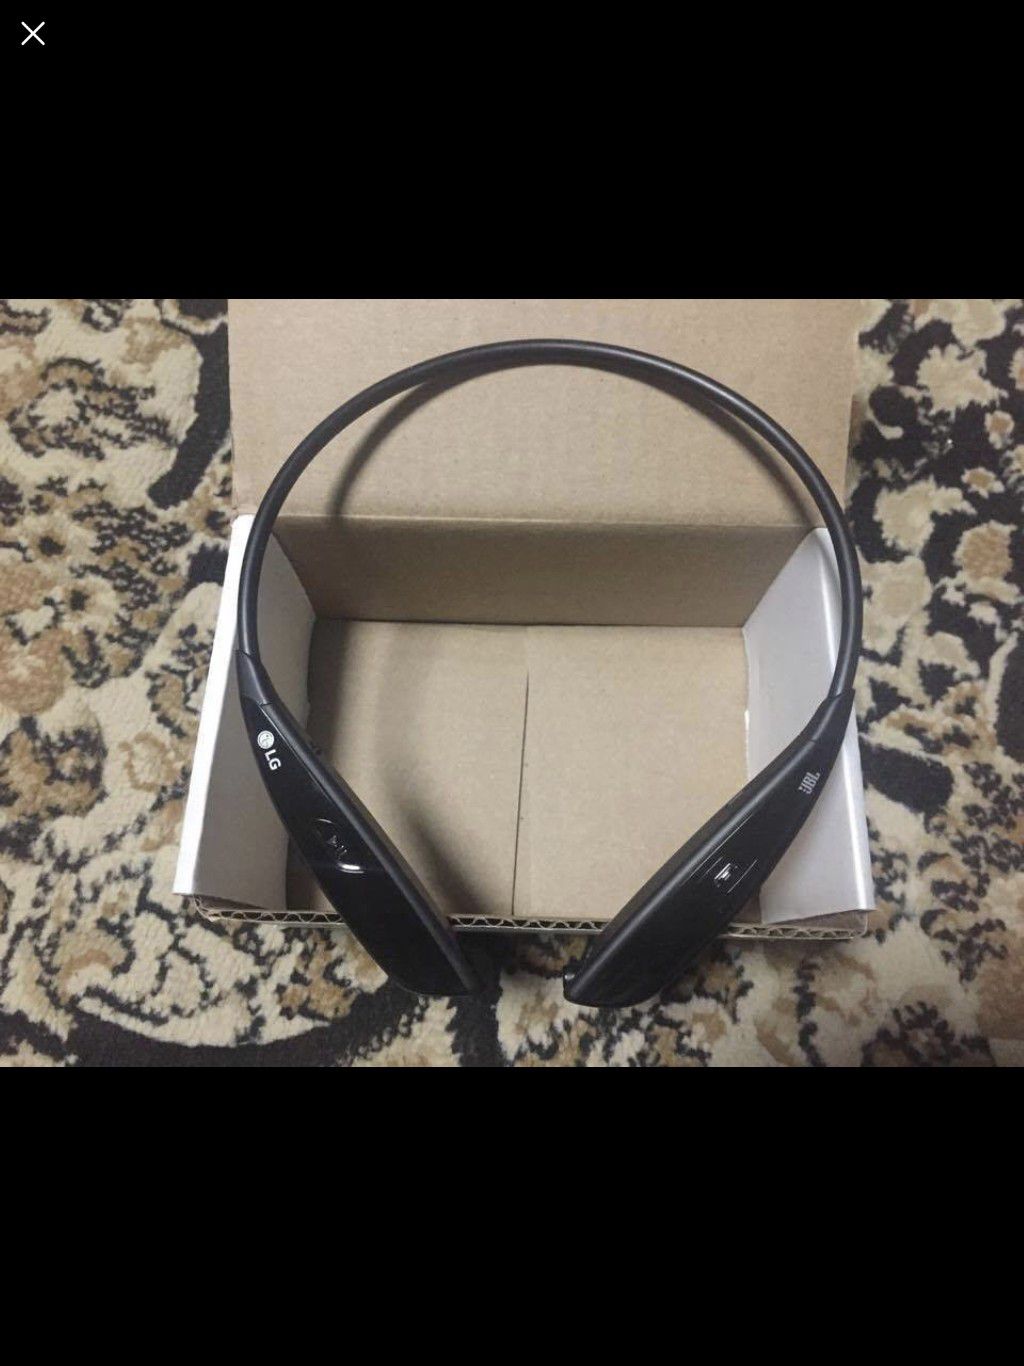 Open box lg tone ultra Bluetooth headset